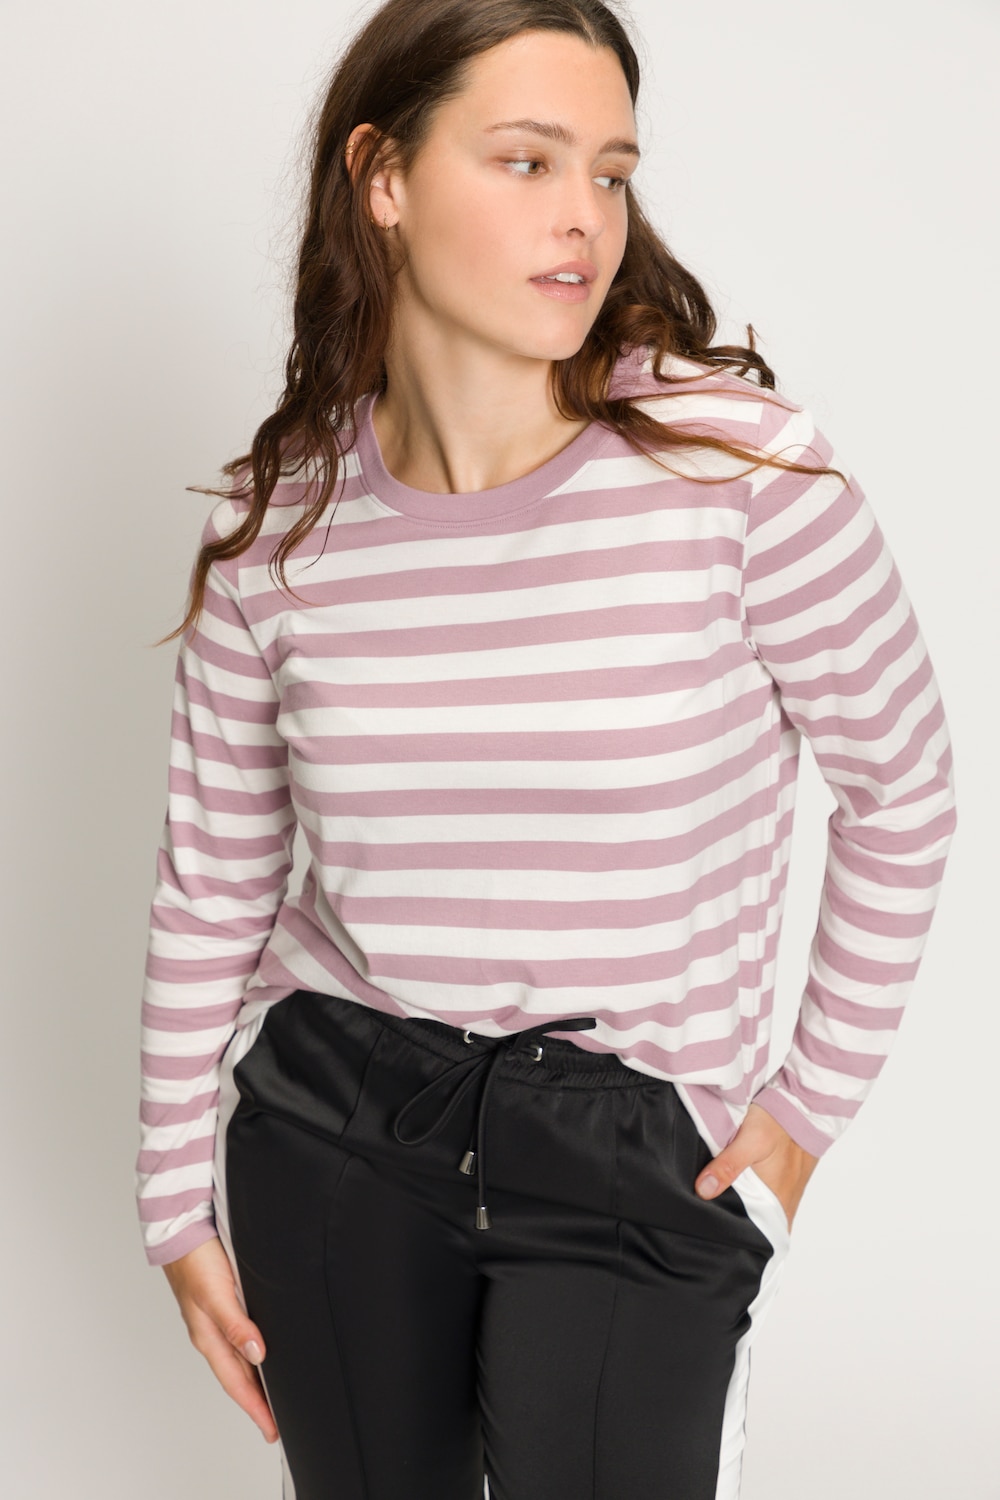 Plus Size Striped Longsleeve Tee, Woman, pink, size: 16/18, cotton, Studio Untold